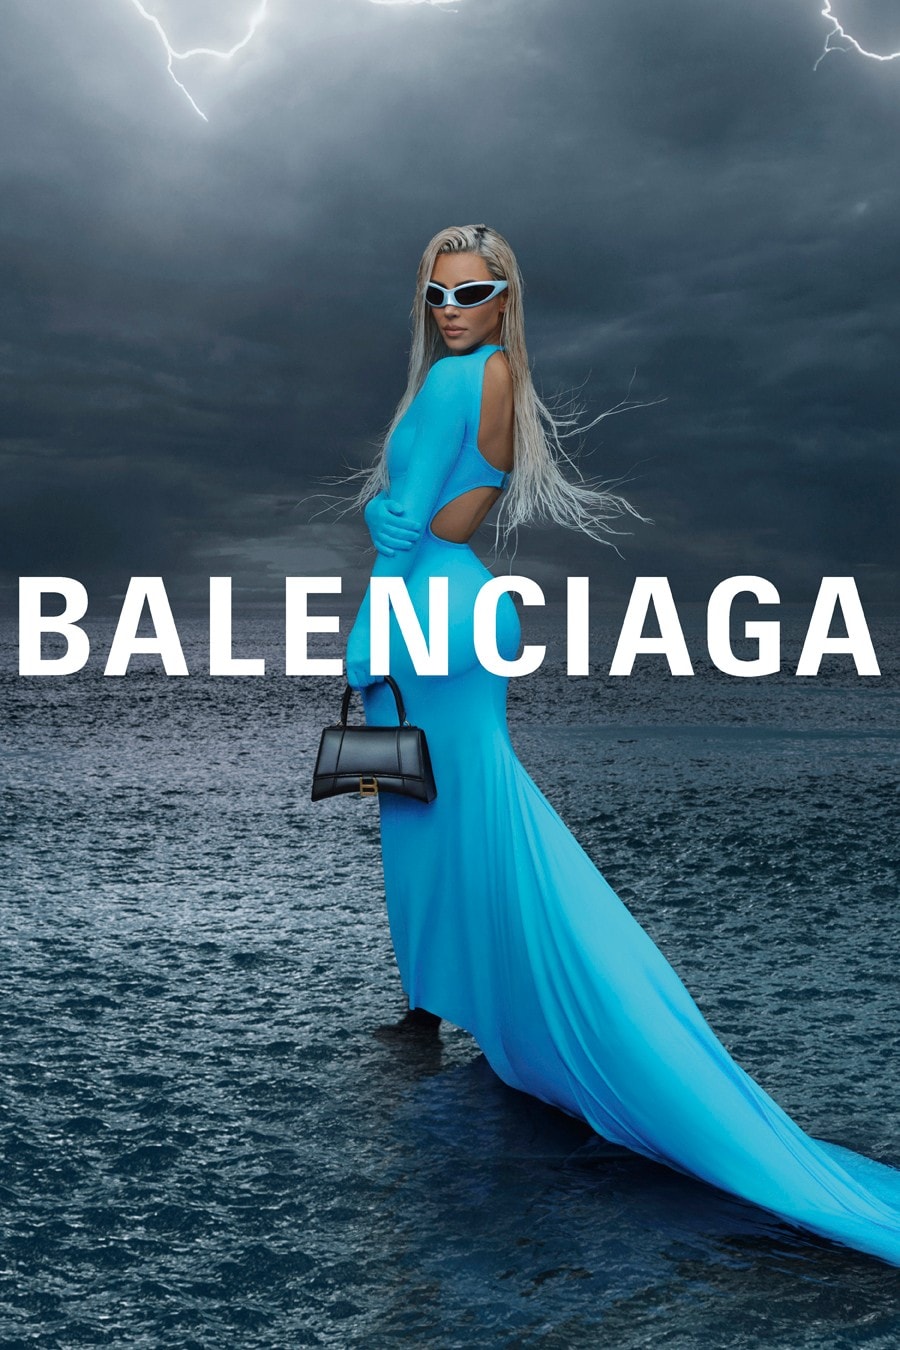 Alexa Demie's Four Bs: Balenciaga, Bandana, Boots & Big Fur Jacket